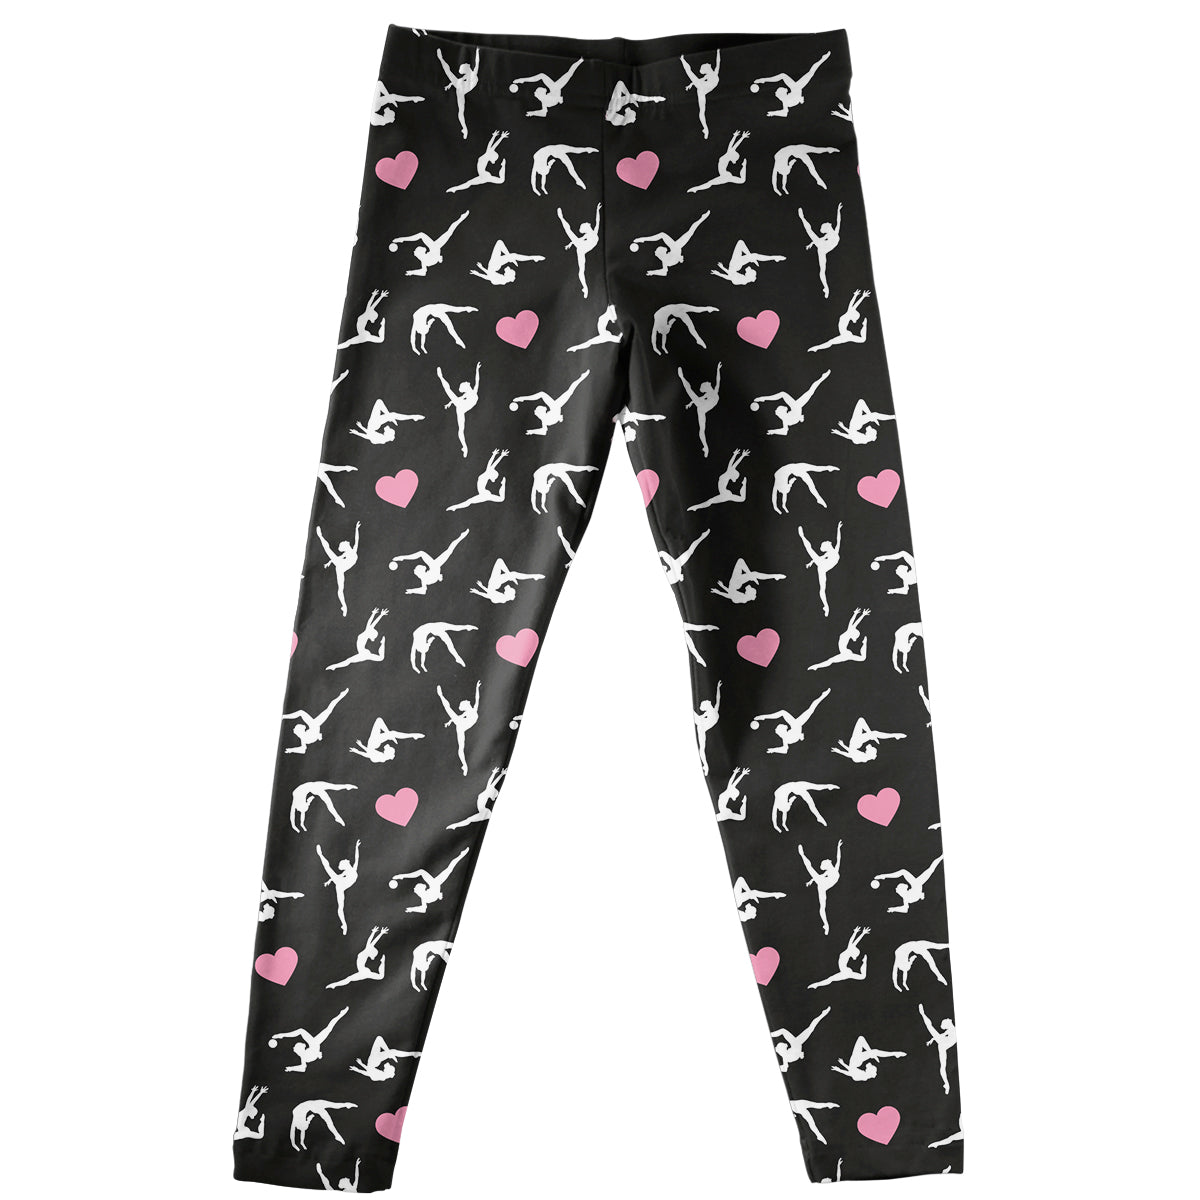 Black and pink hearts gymnastics girls leggings - Wimziy&Co.